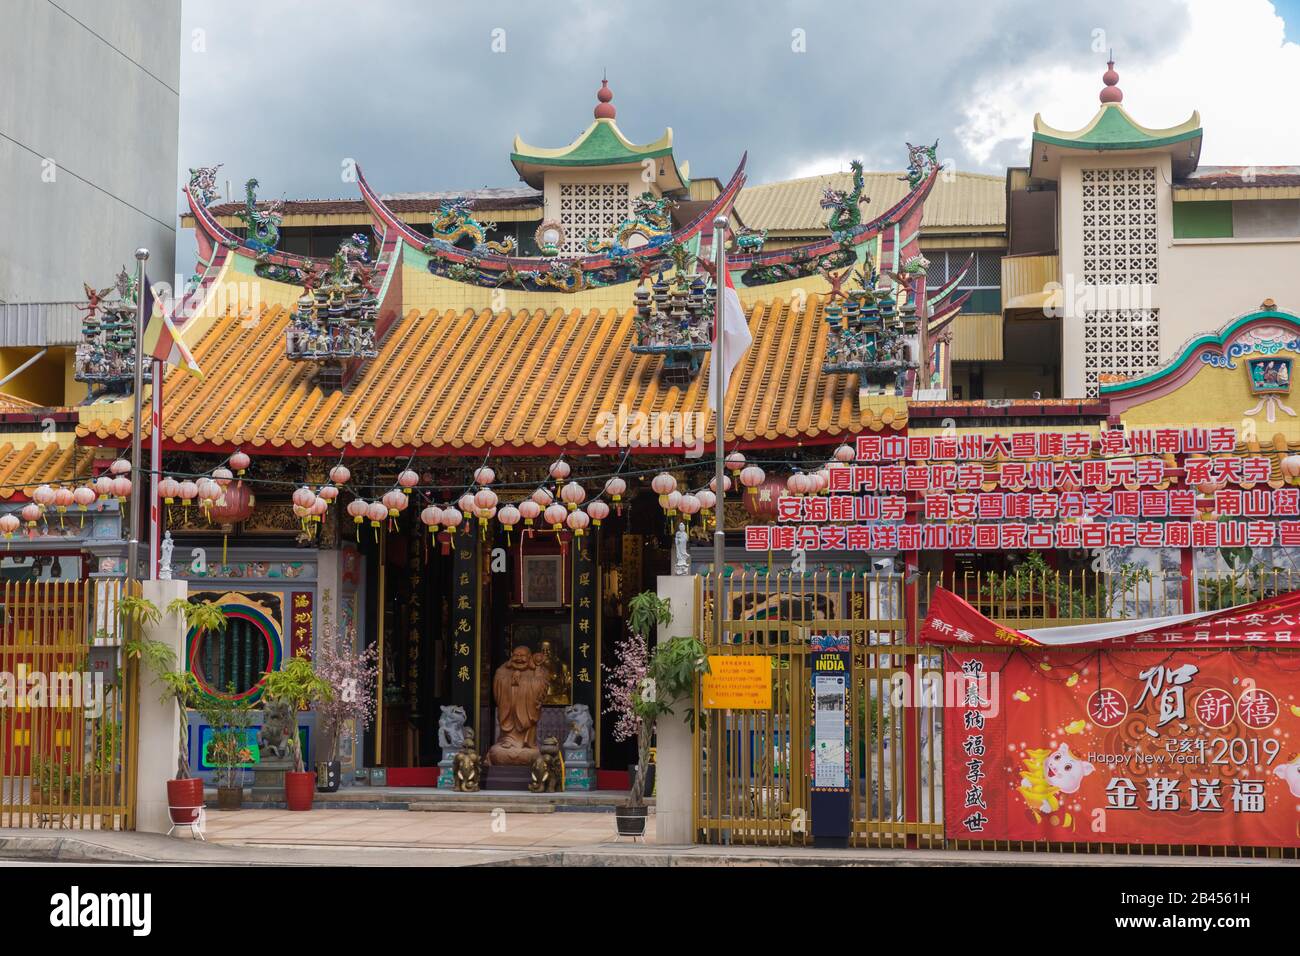 Leong San See temple, Little India, Singapore Stock Photo